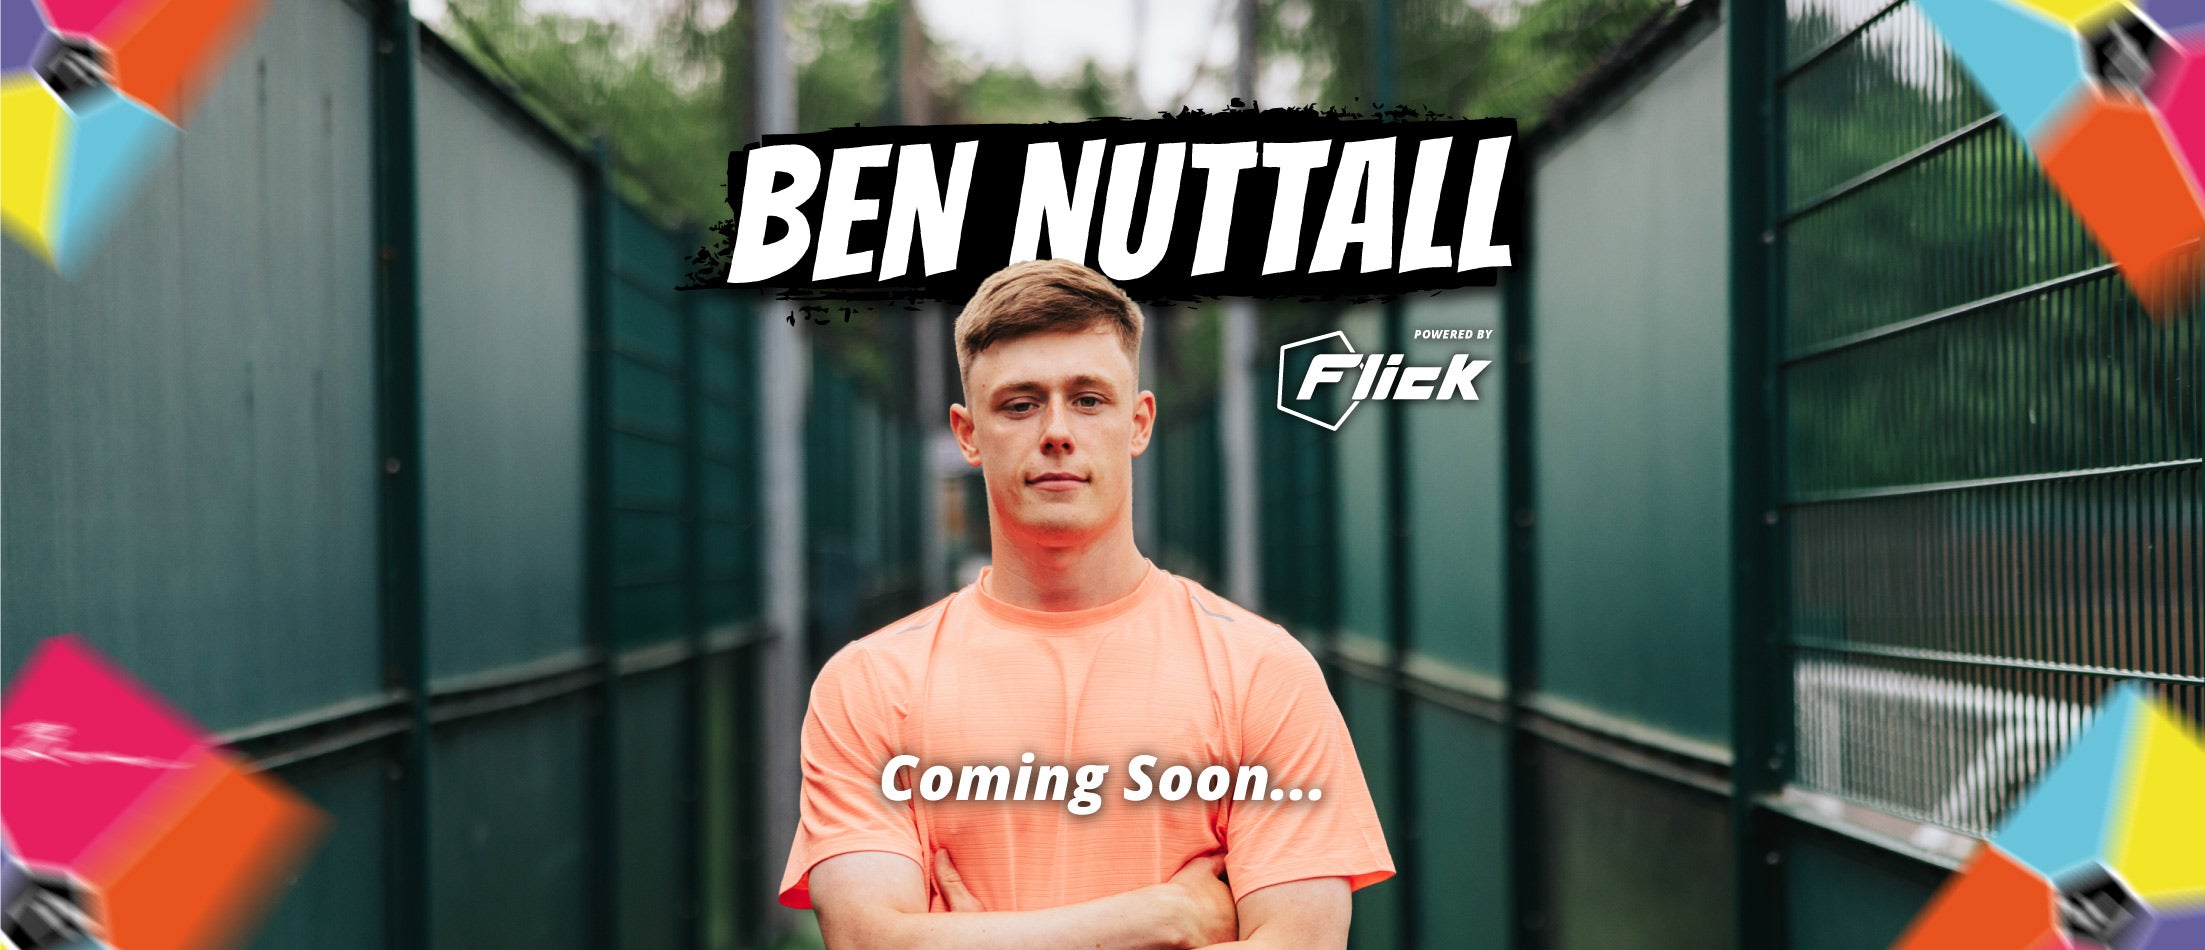 Ben Nuttall Challenge Pack - A World First...